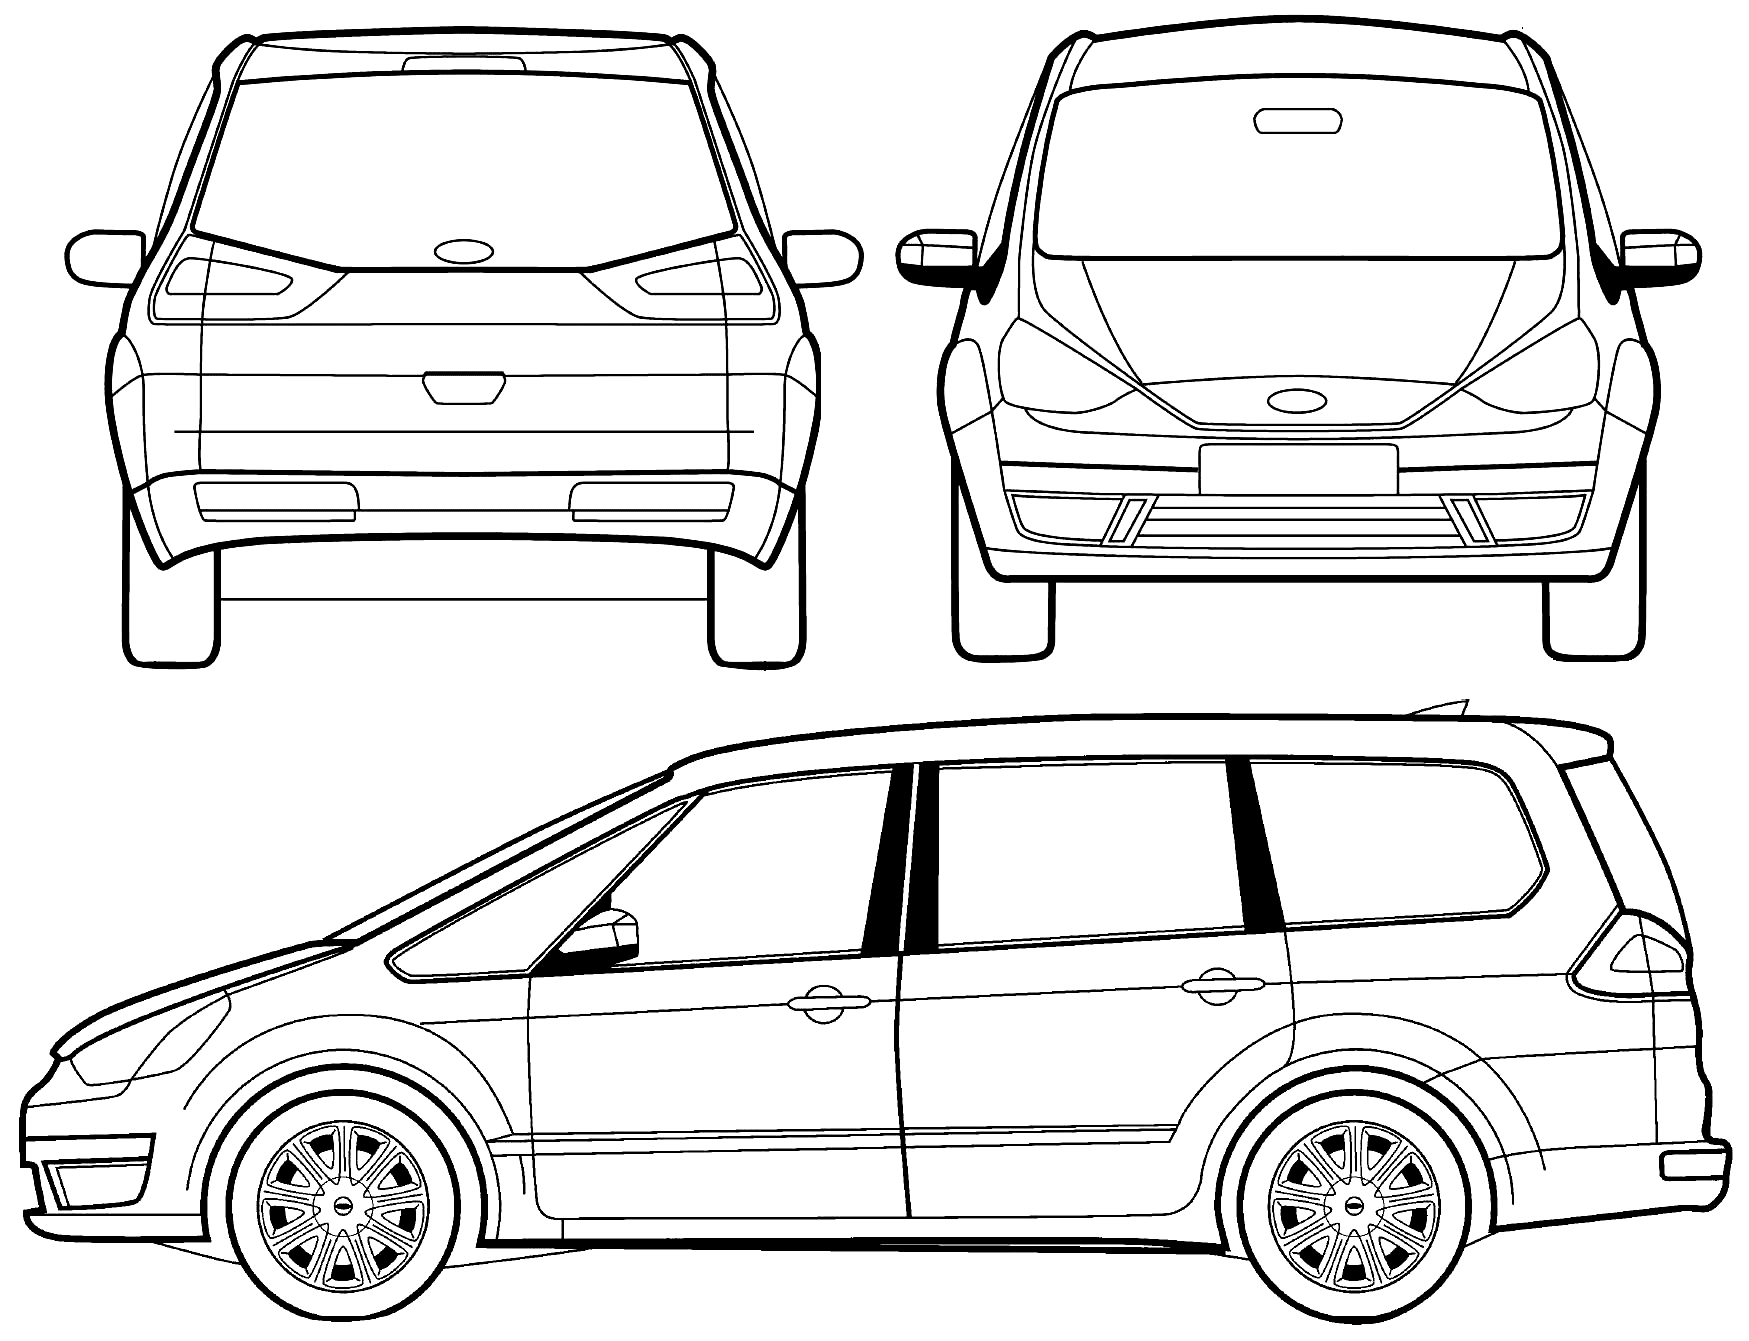 2007 Ford Galaxy II Minivan blueprints free - Outlines